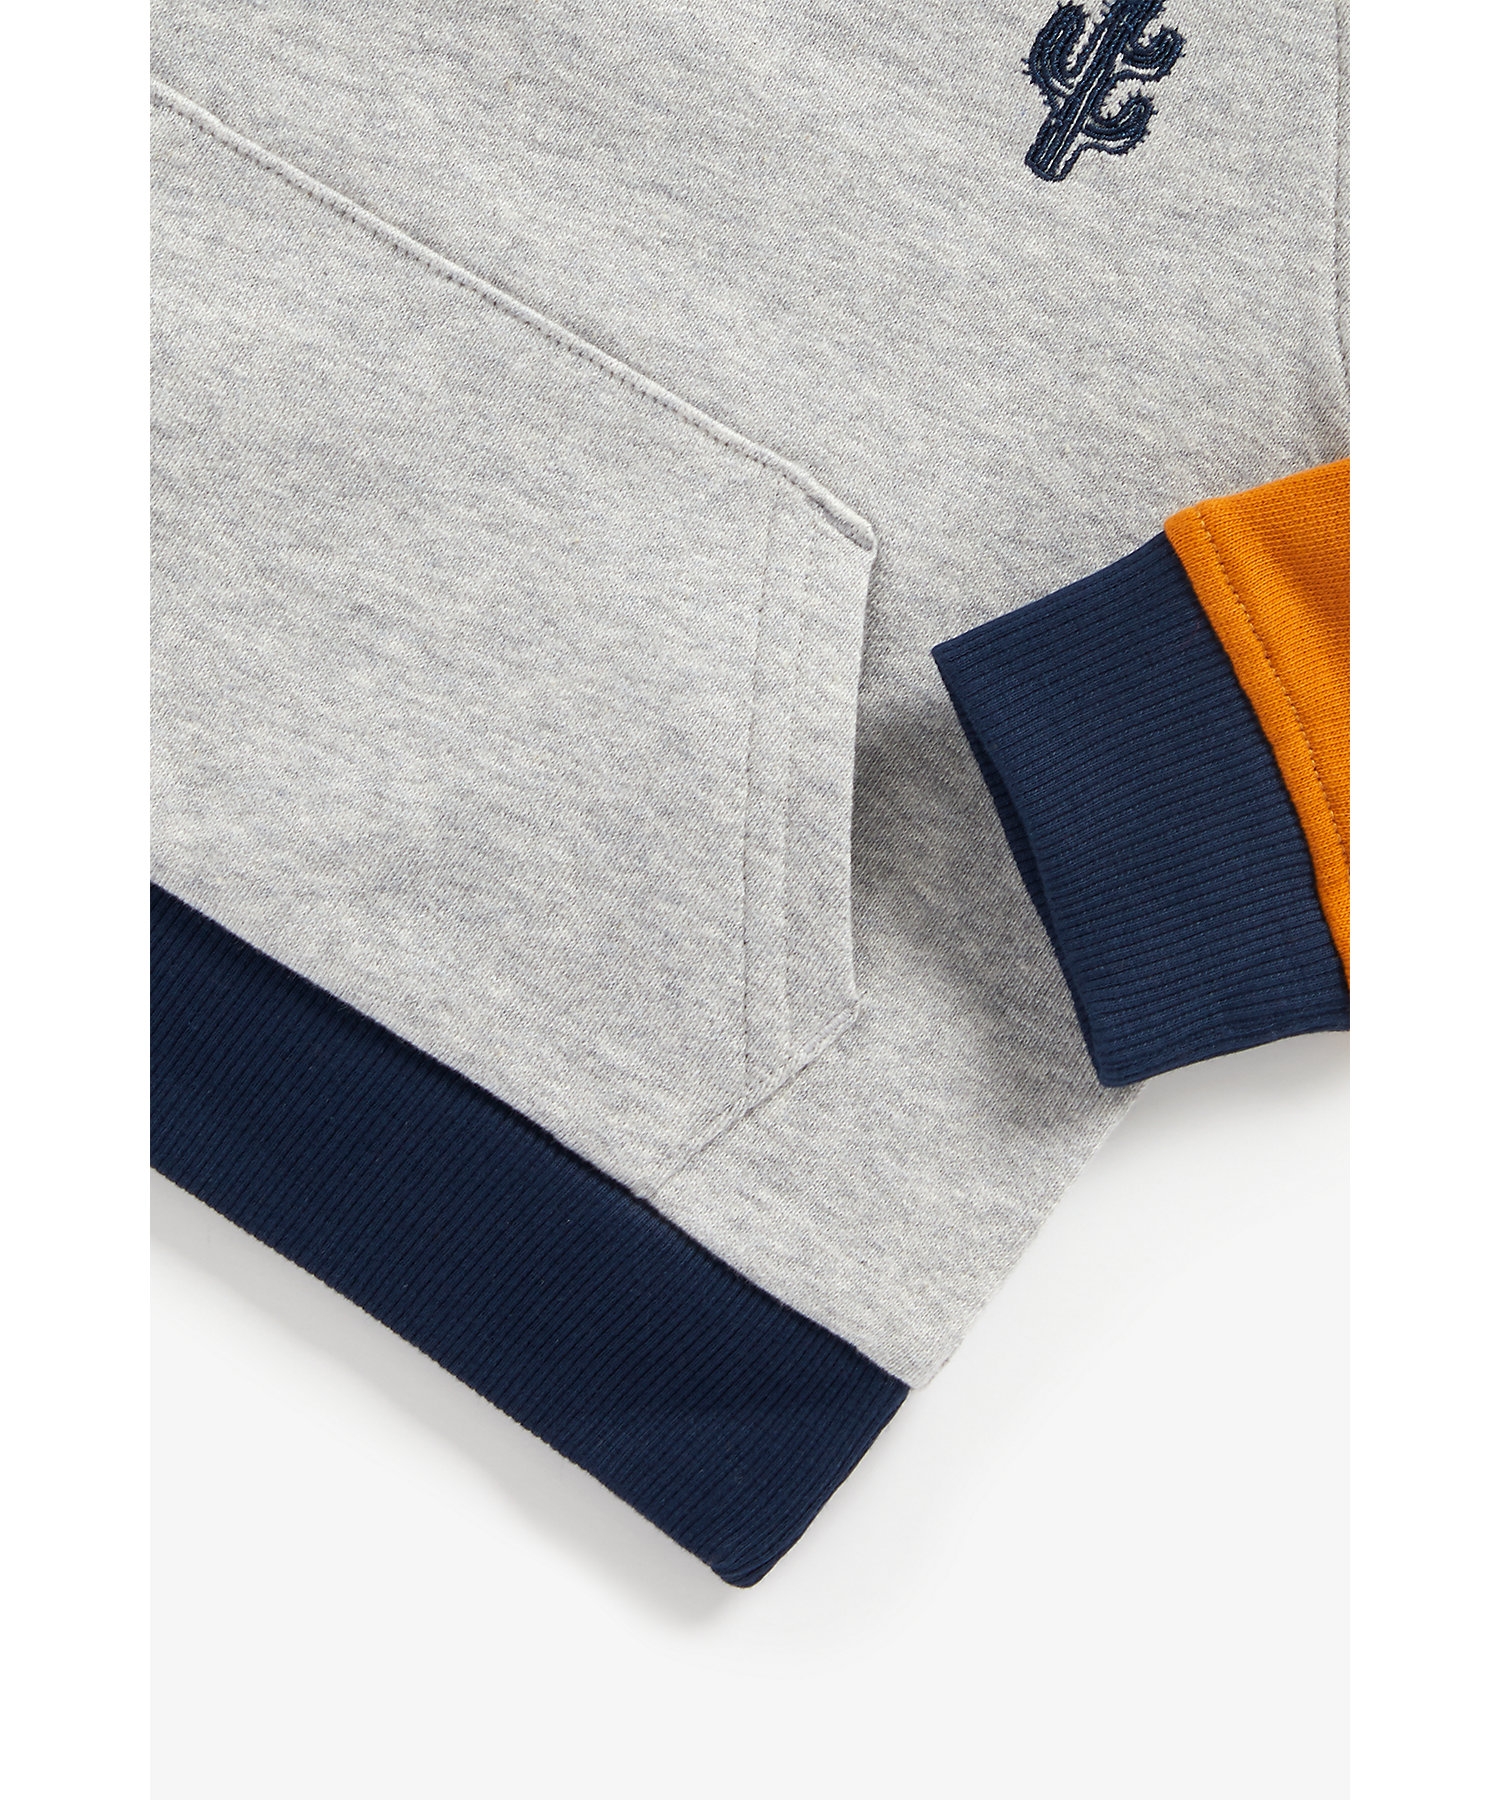 Boys Full Sleeves Sweatshirt Embroidered - Grey